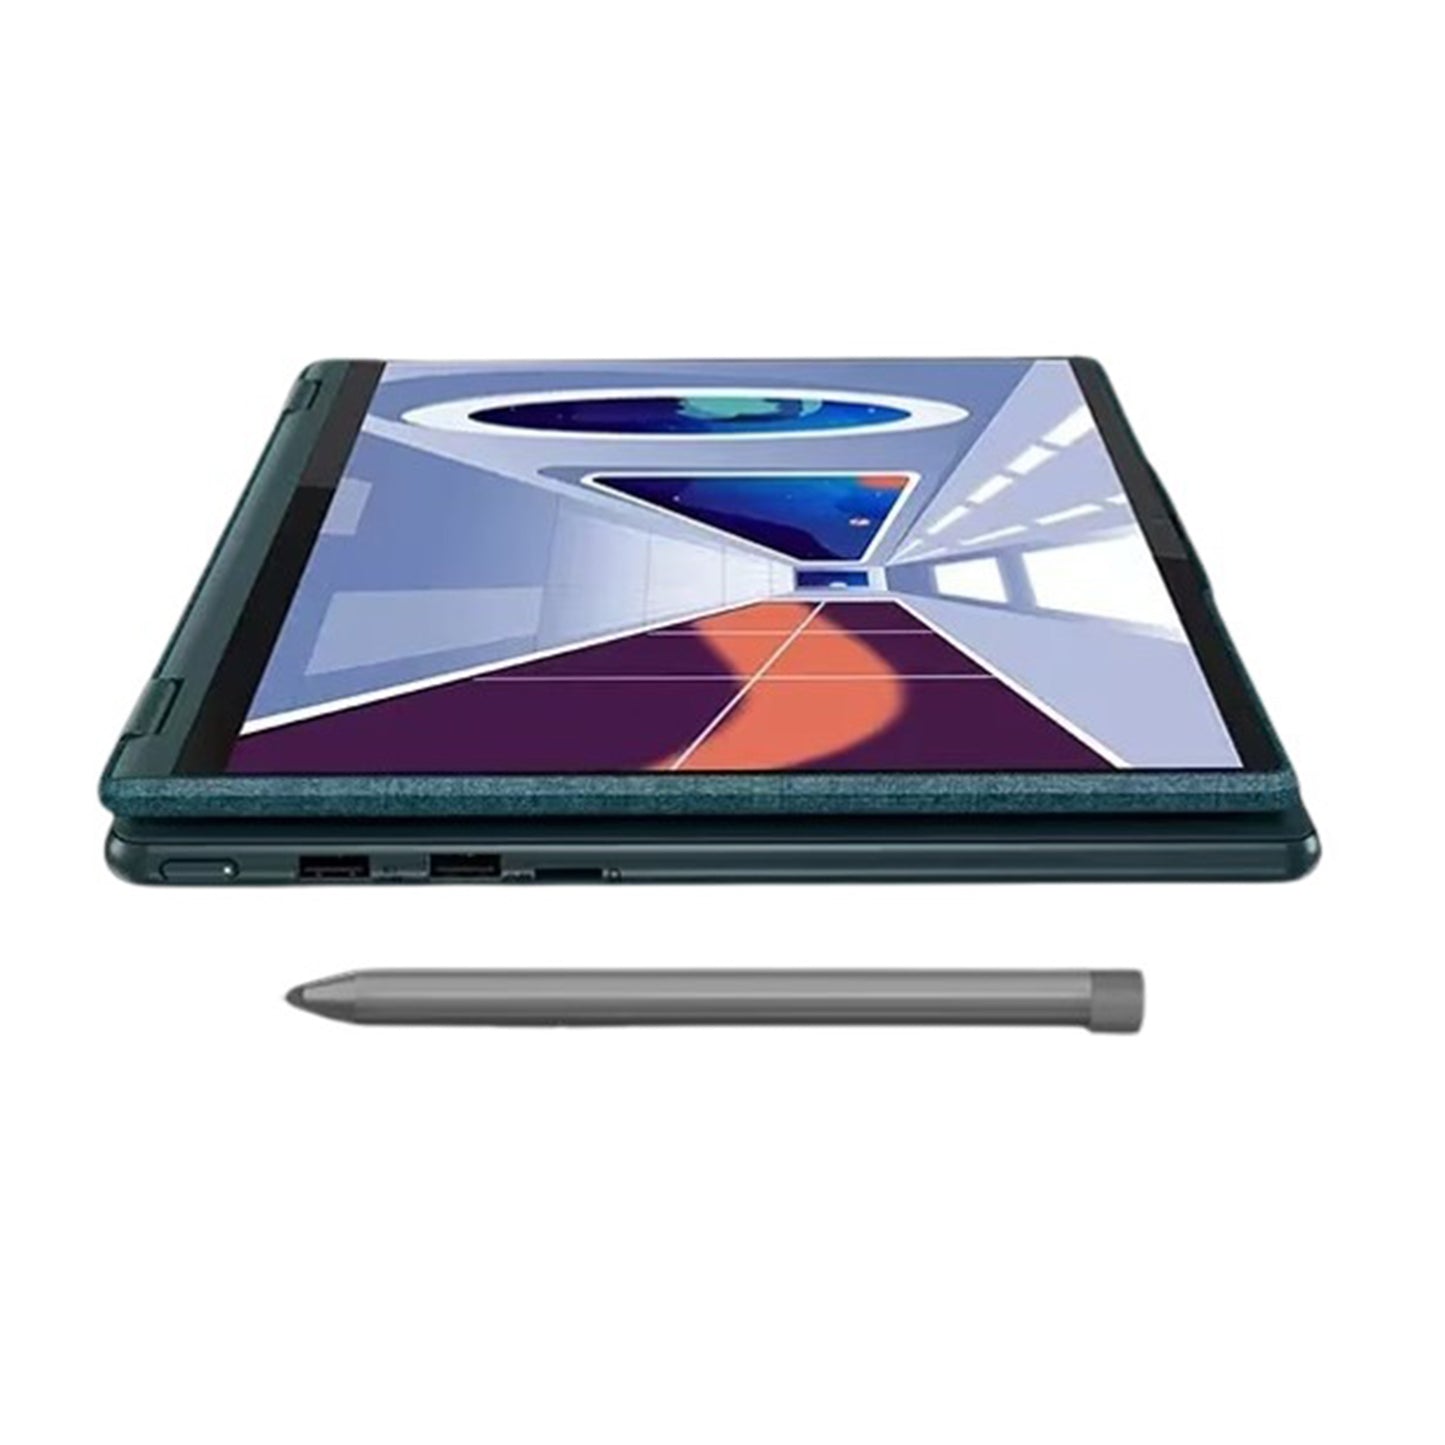 Yoga 6 (13 بوصة AMD) - أزرق مخضر داكن مع غطاء علوي من الألومنيوم 